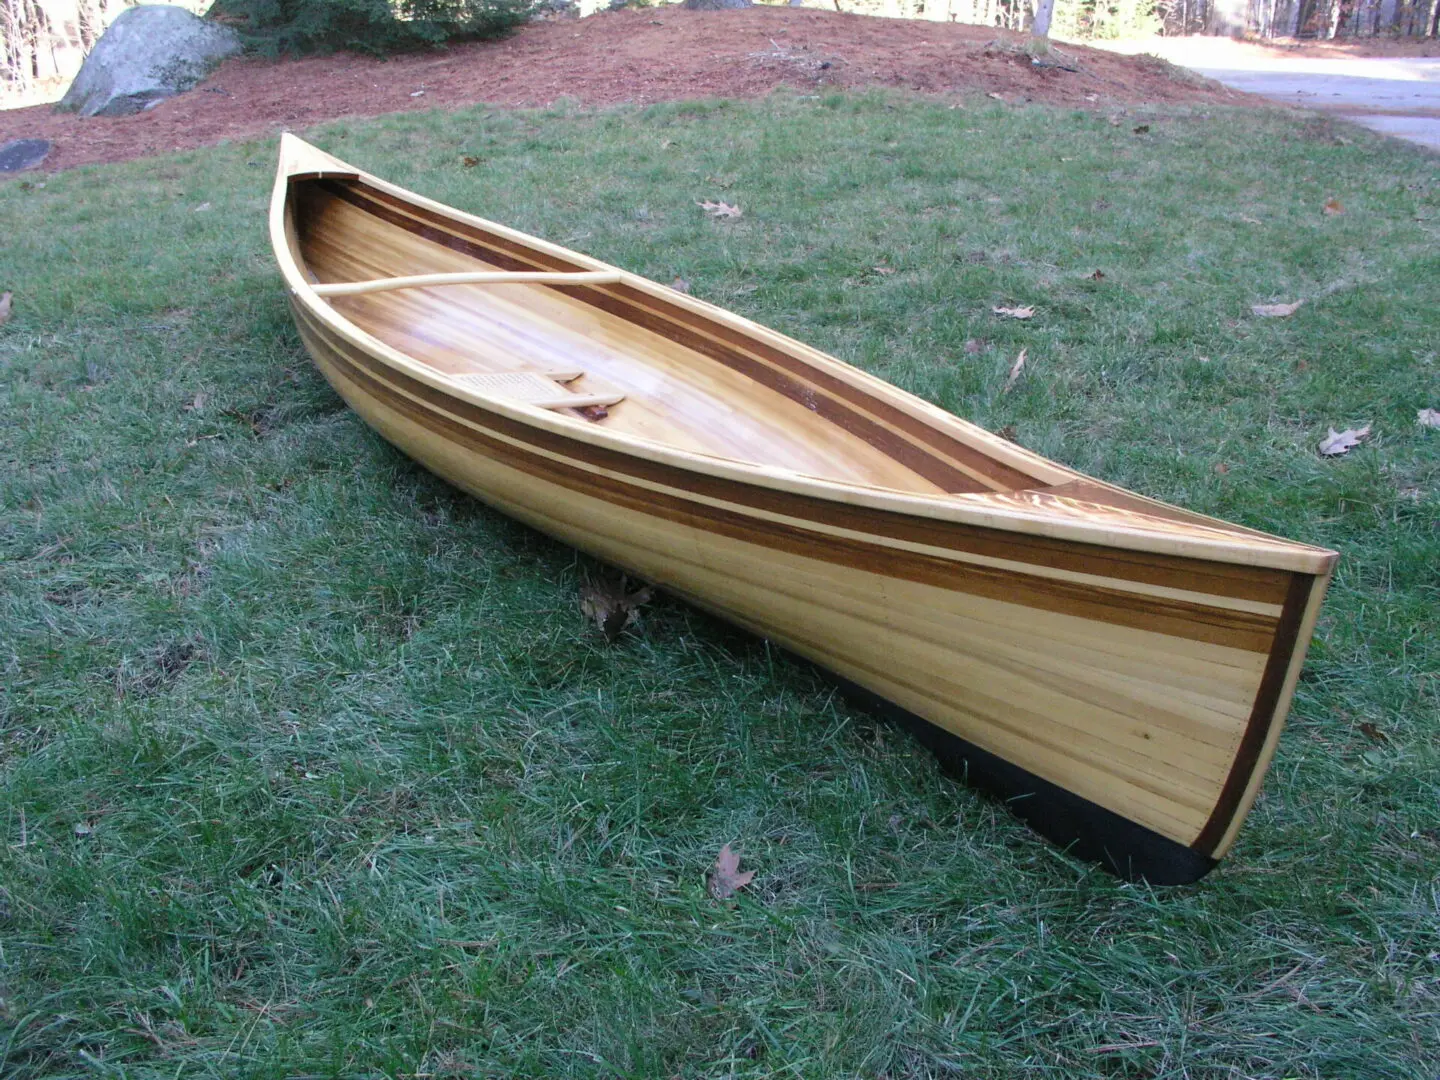 Strip Canoe Kits